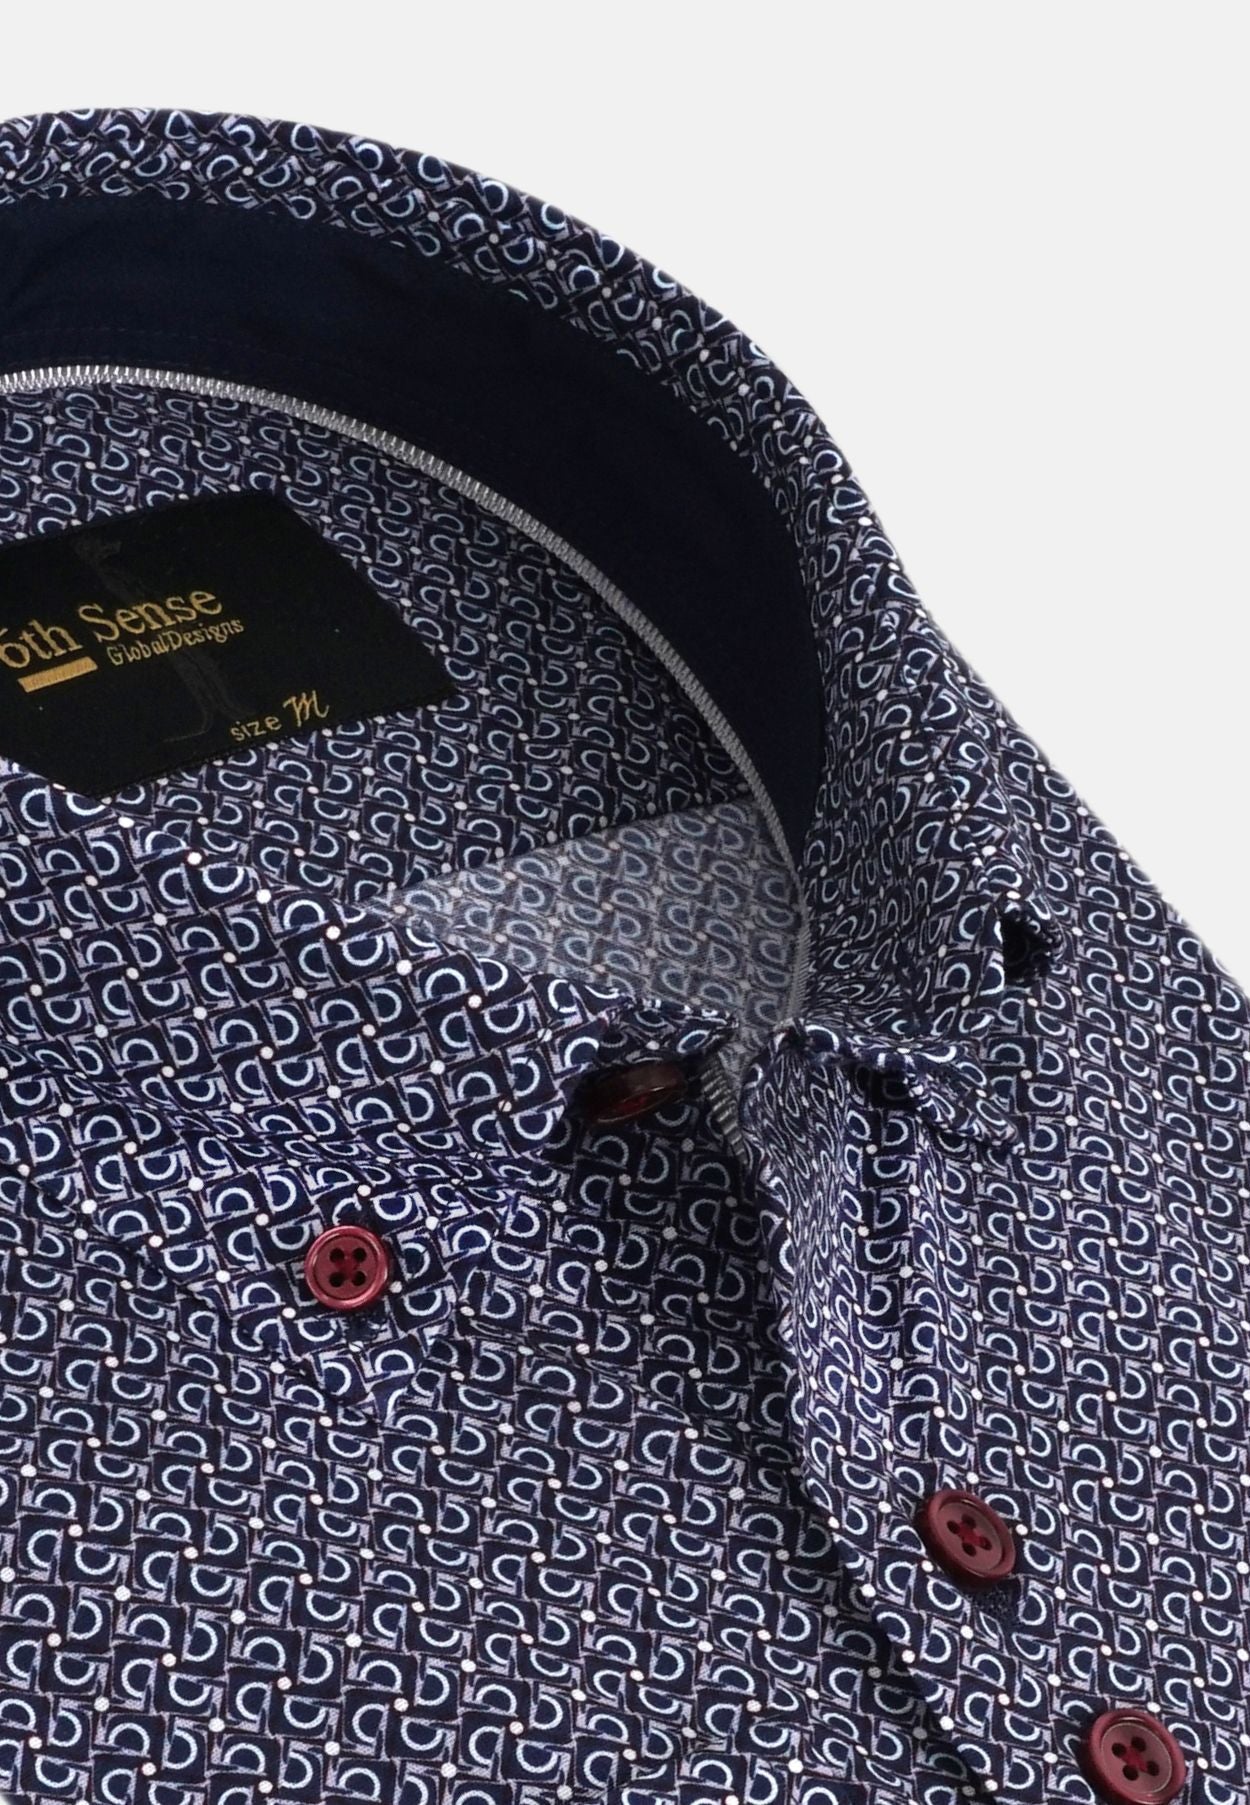 Men's Button Down Navy/Burgundy Print Shirt-Collar View